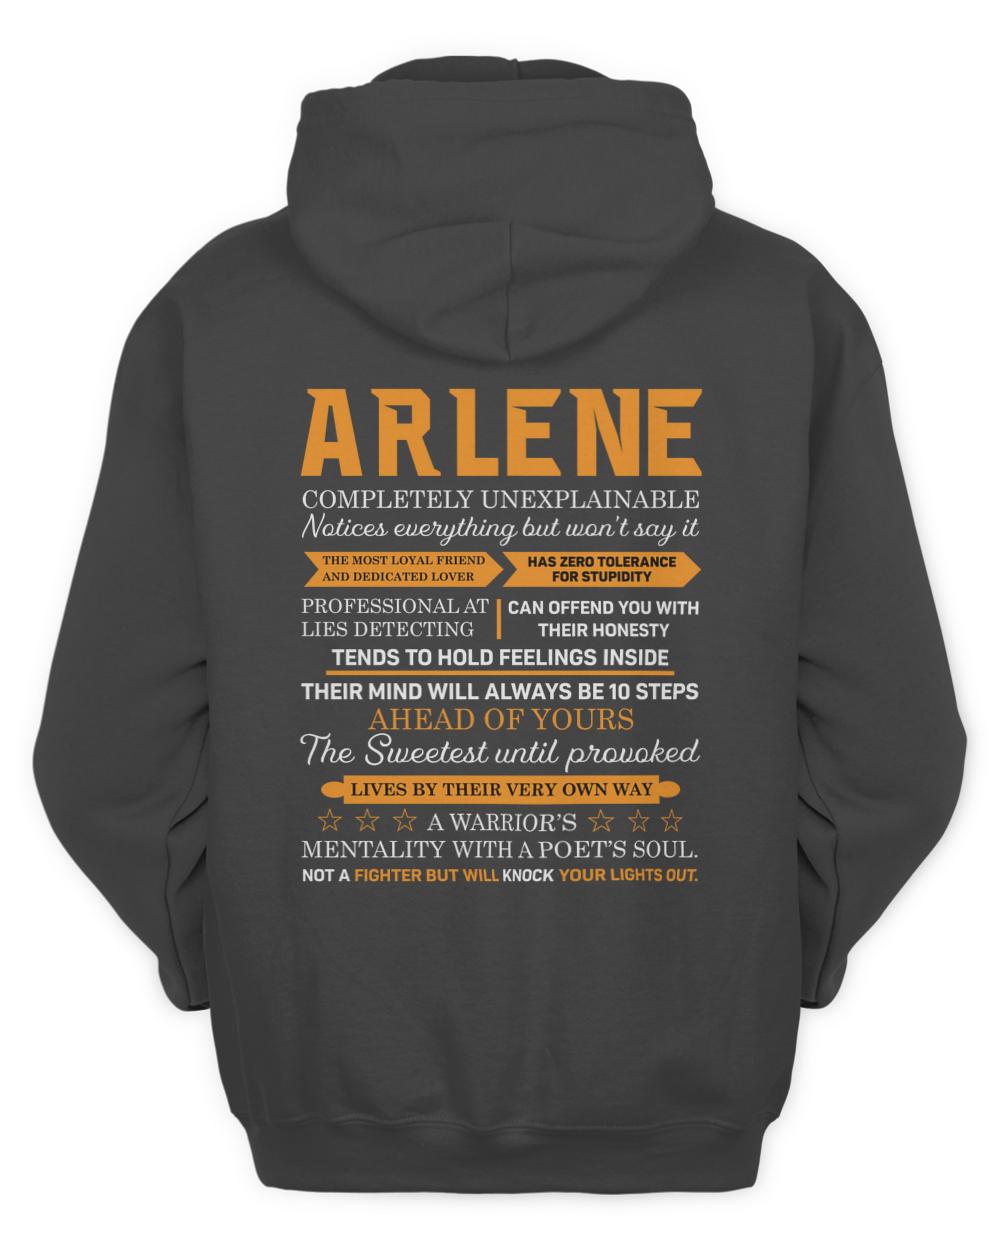 ARLENE-13K-N1-01